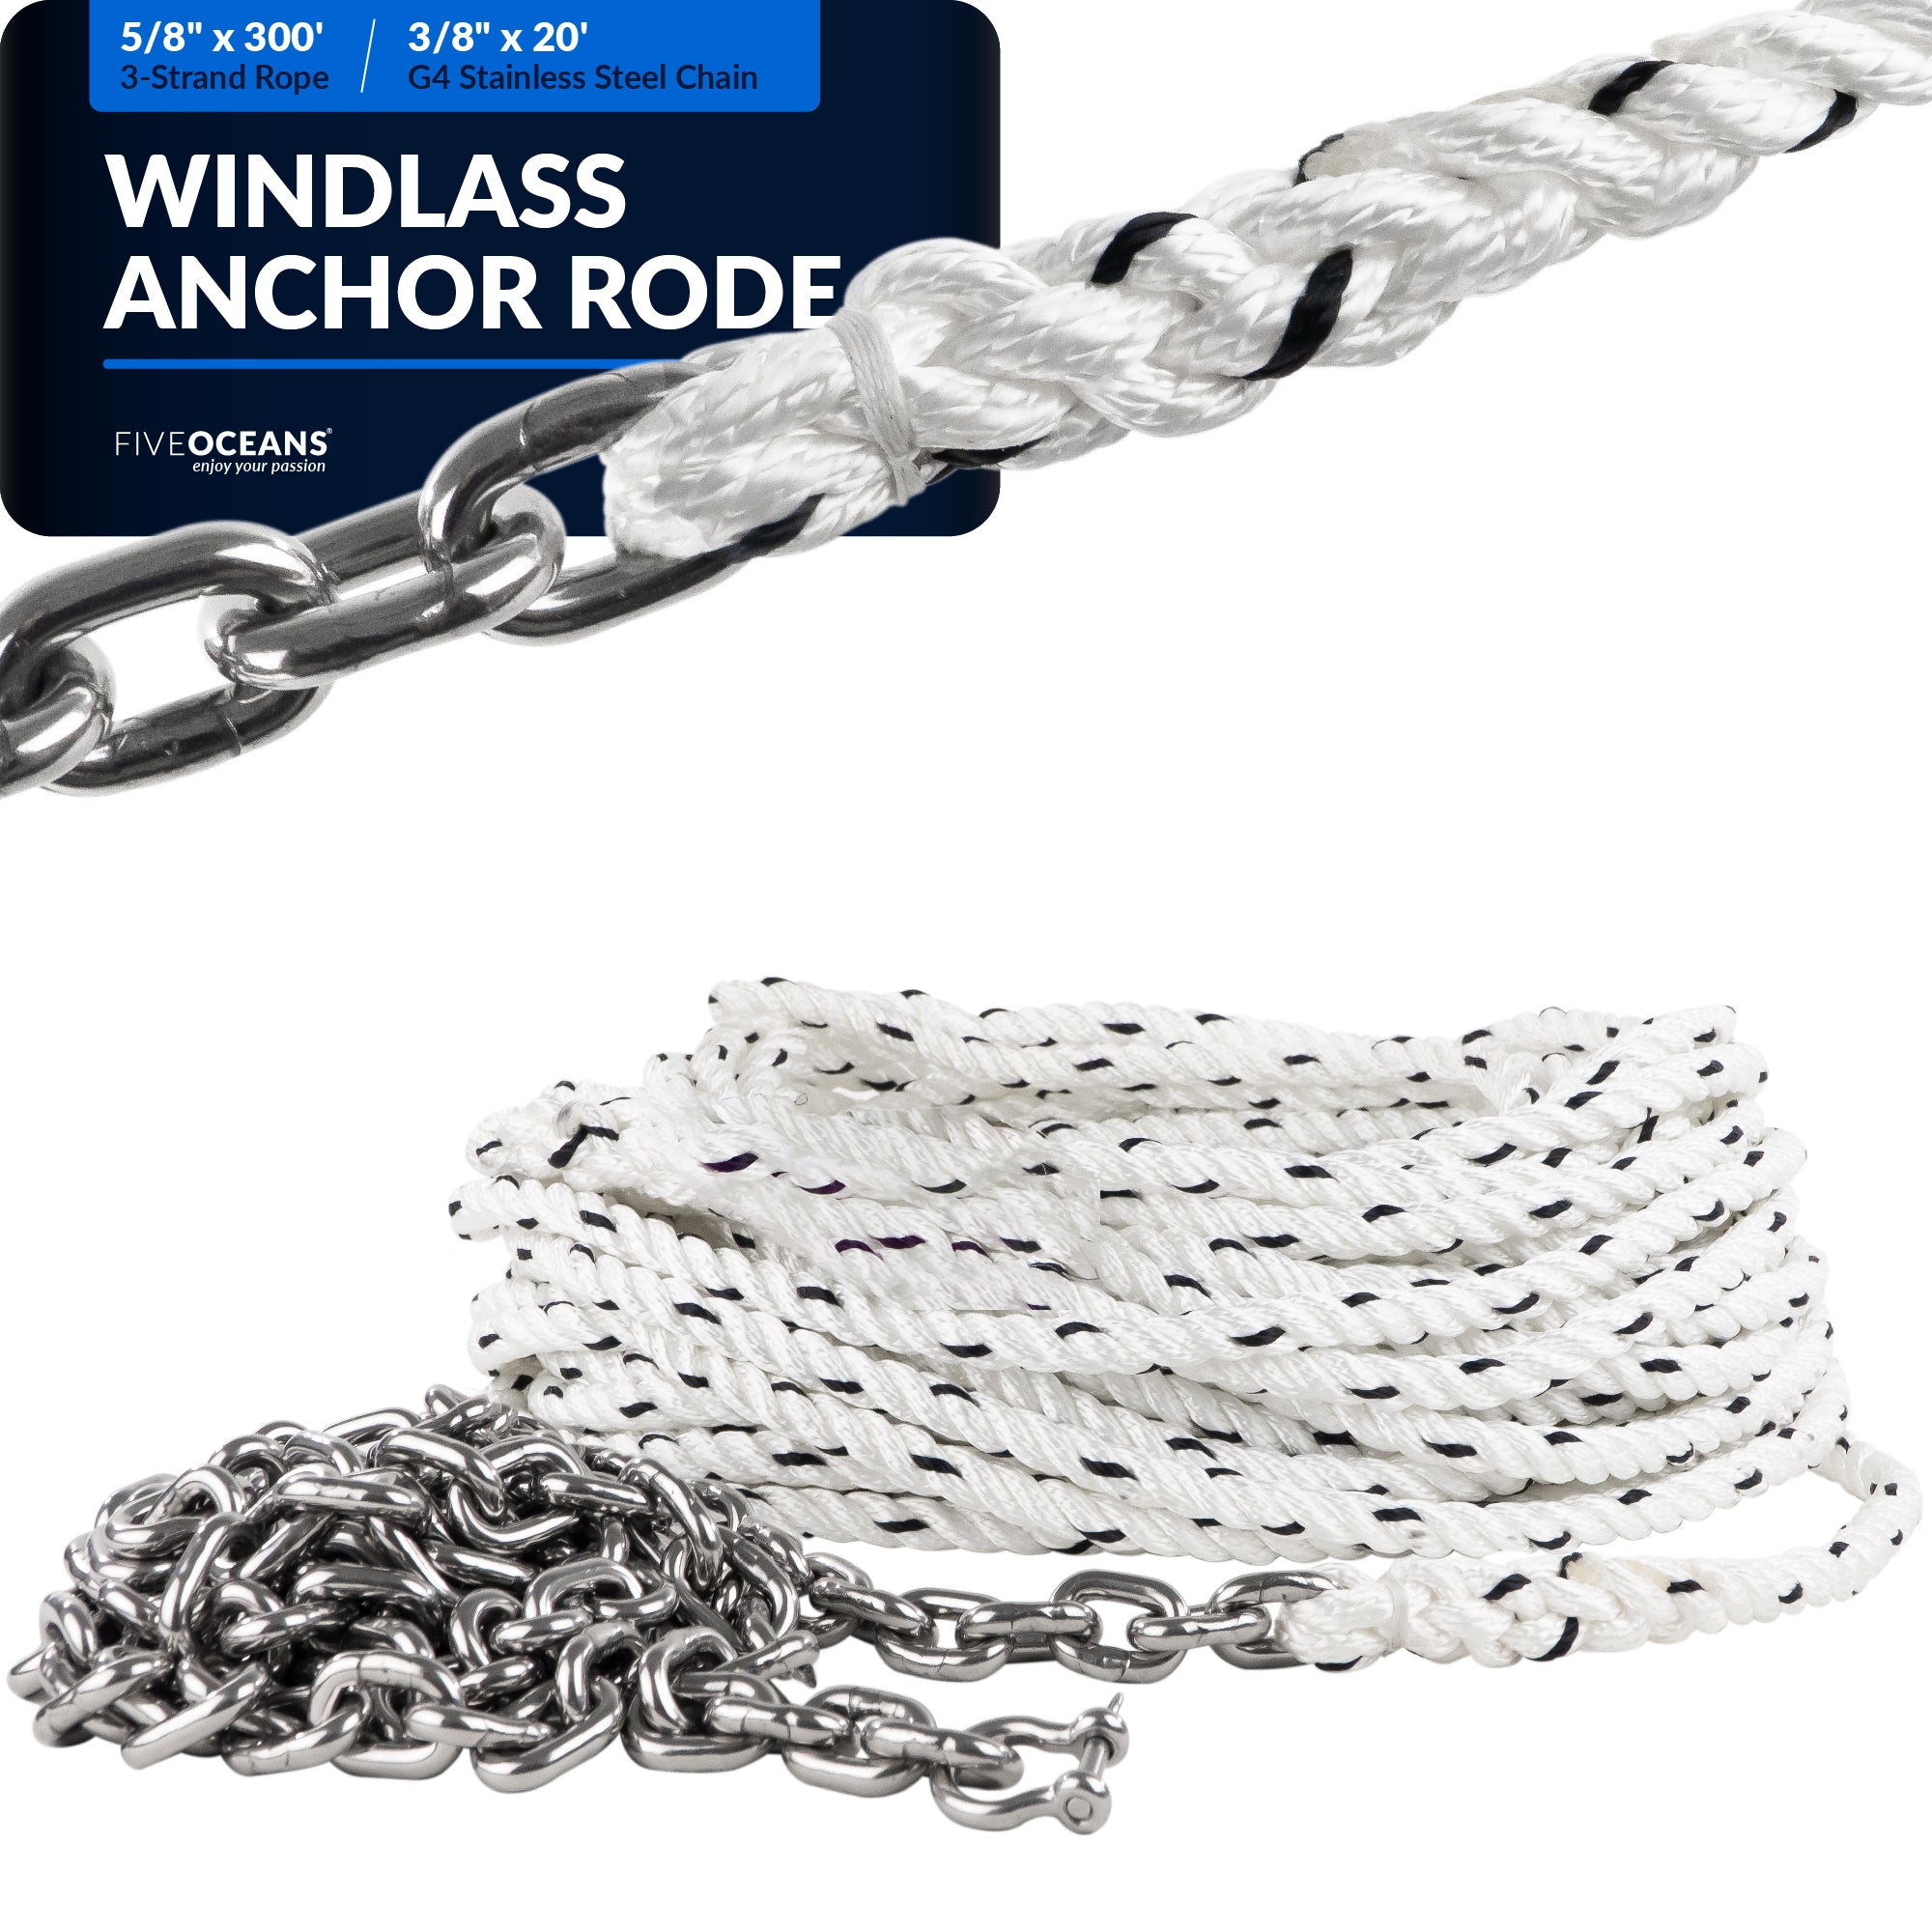 Windlass Anchor Rode, 5/8" x 300' Nylon 3-Strand Rope, 3/8" x 20' G4 Stainless Steel Chain - FO4575